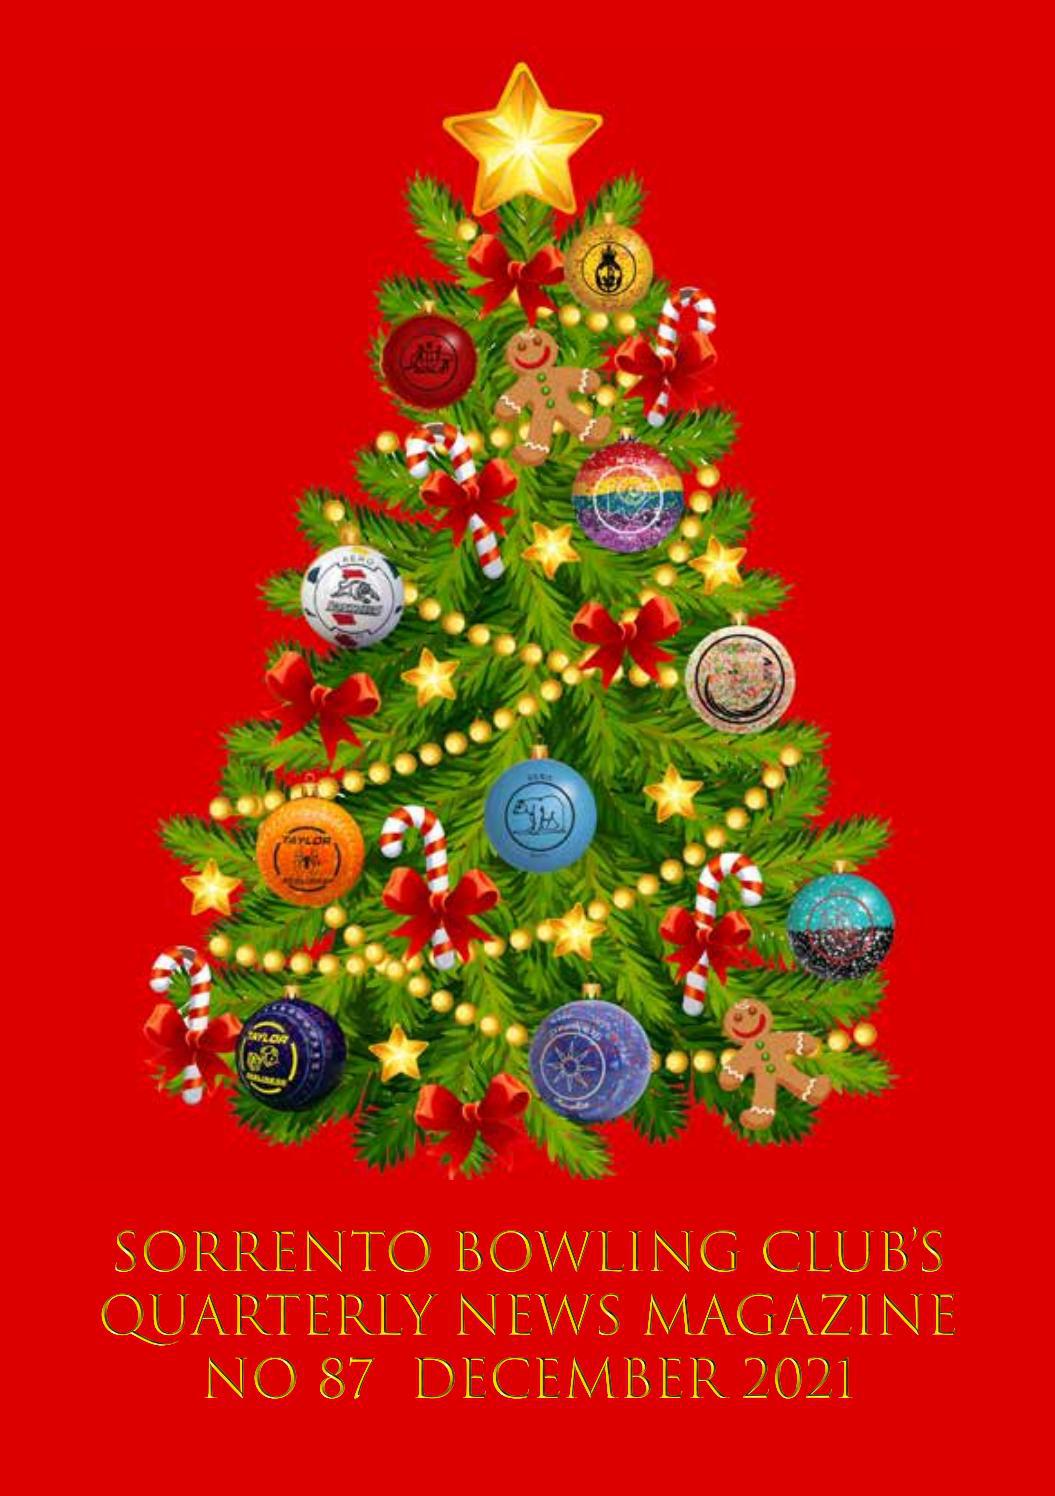 Sorrento Bowling Club Magazine Issue 87 December 2021